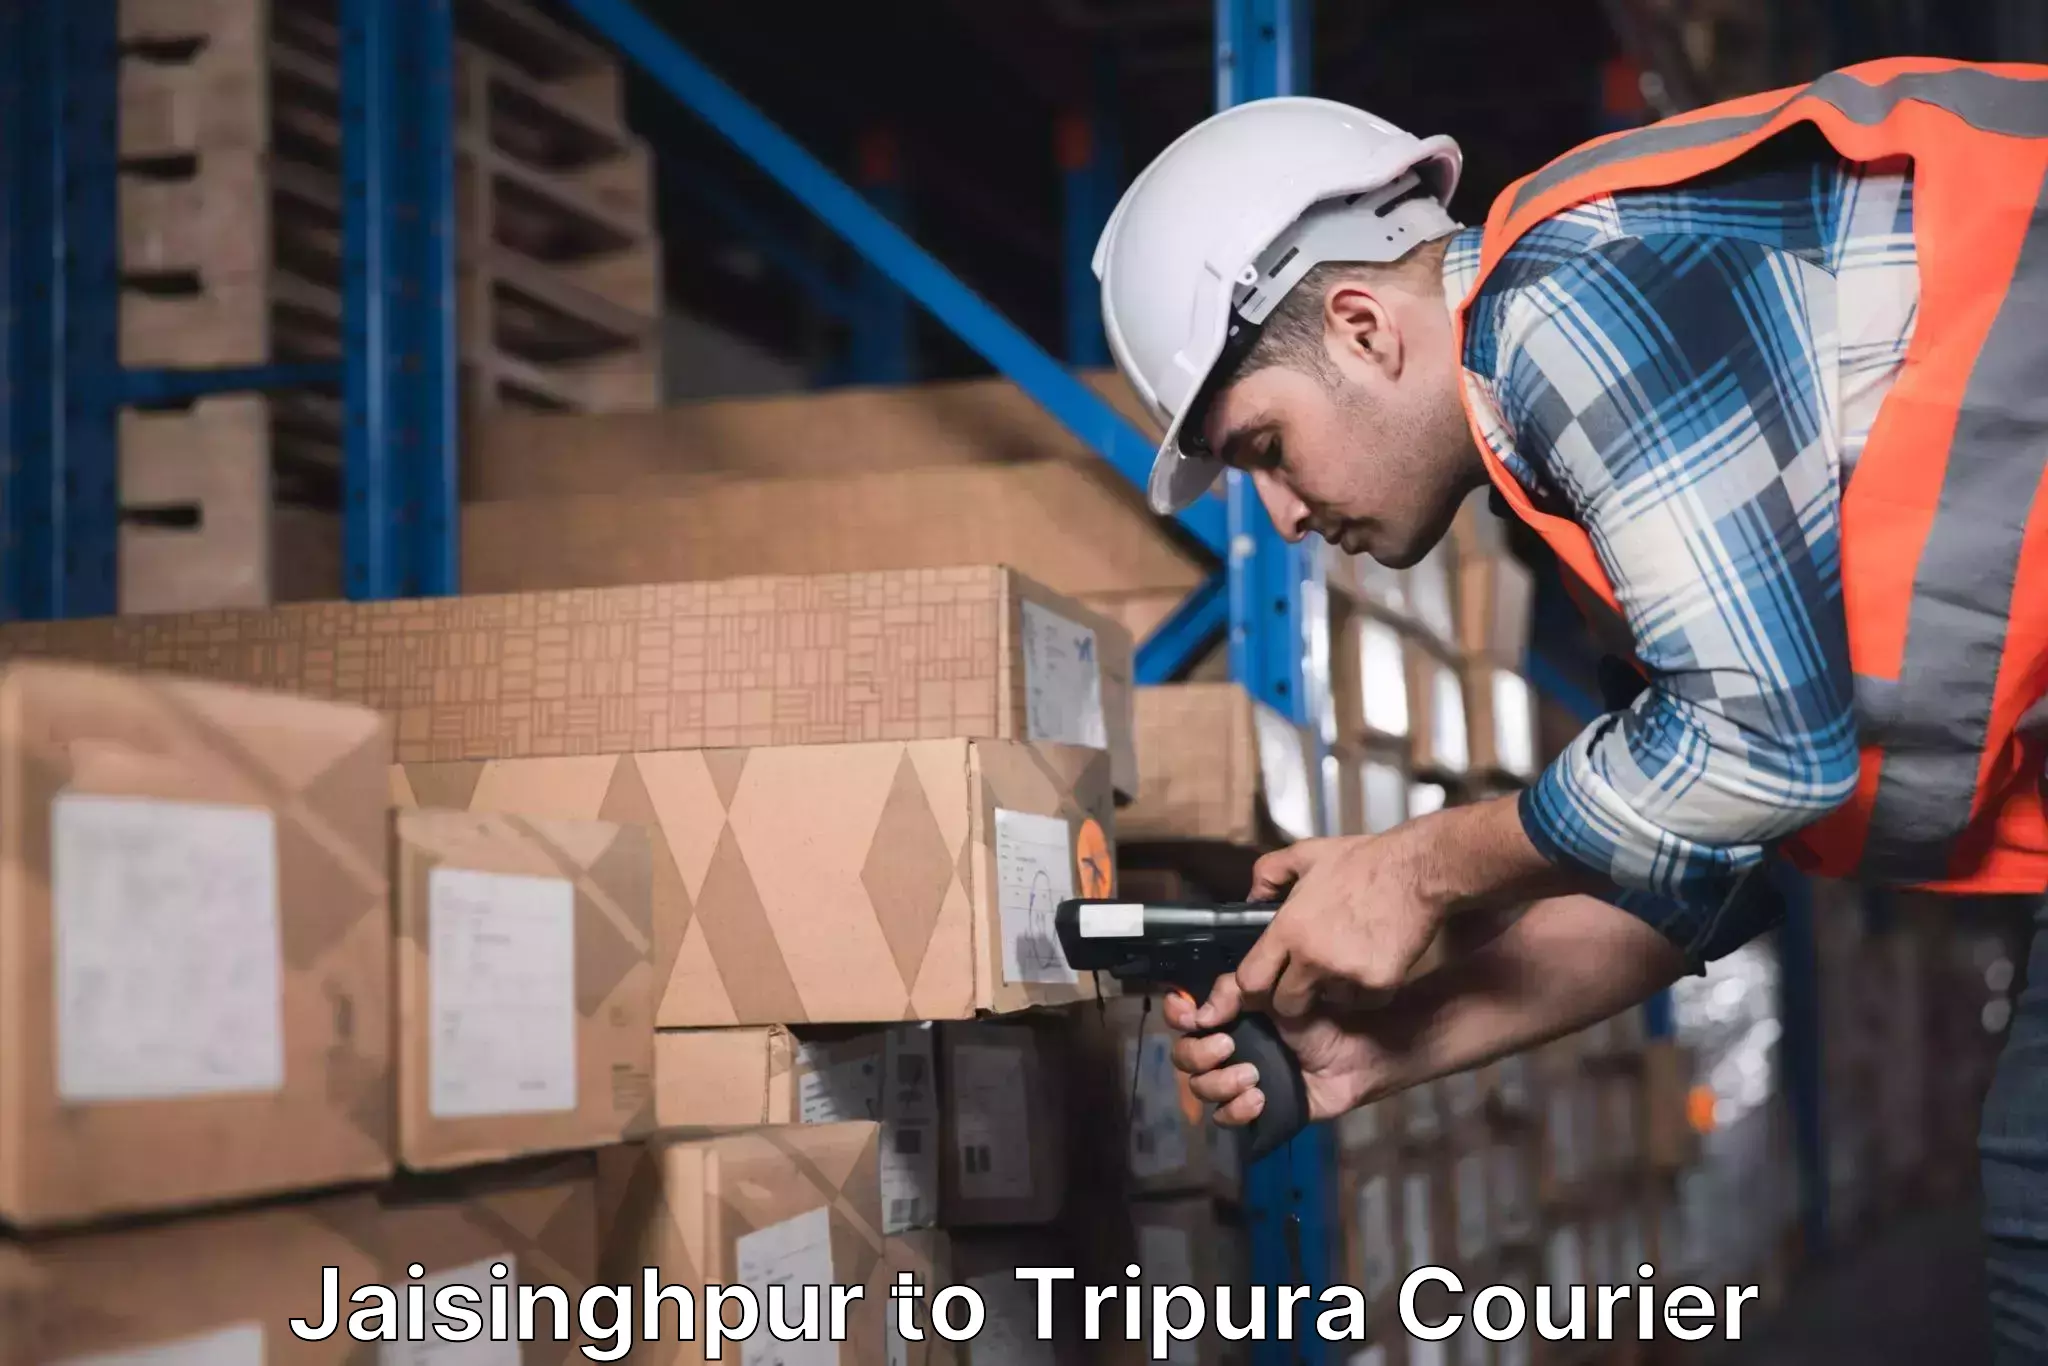 Courier service partnerships Jaisinghpur to Udaipur Tripura